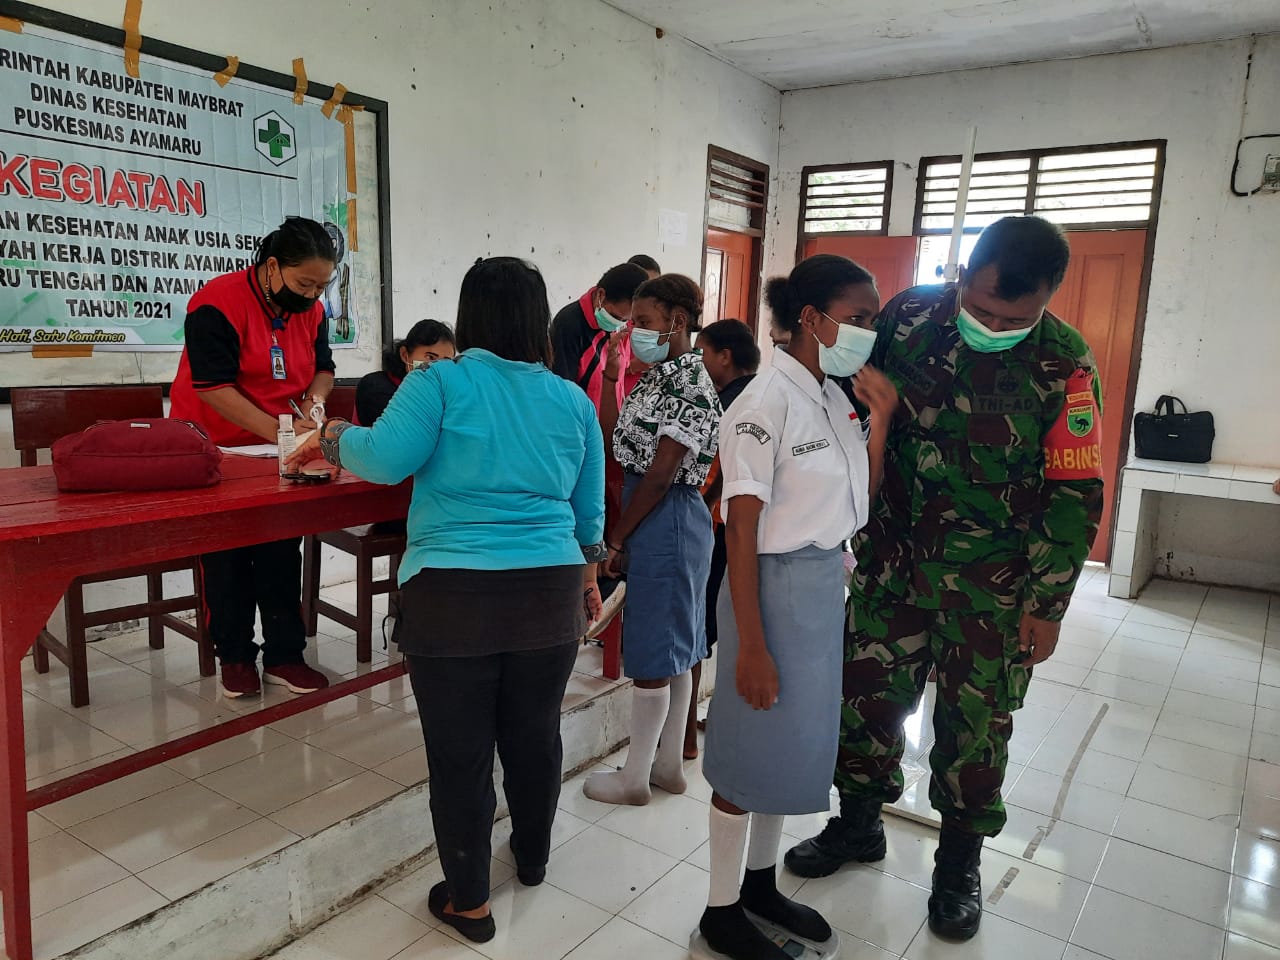 Puskesmas Ayamaru kabupaten Maybrat melakukan pemeriksaan pertumbuhan kesehatan fisik anak usia sekolah di SMA Negeri 1 Ayamaru